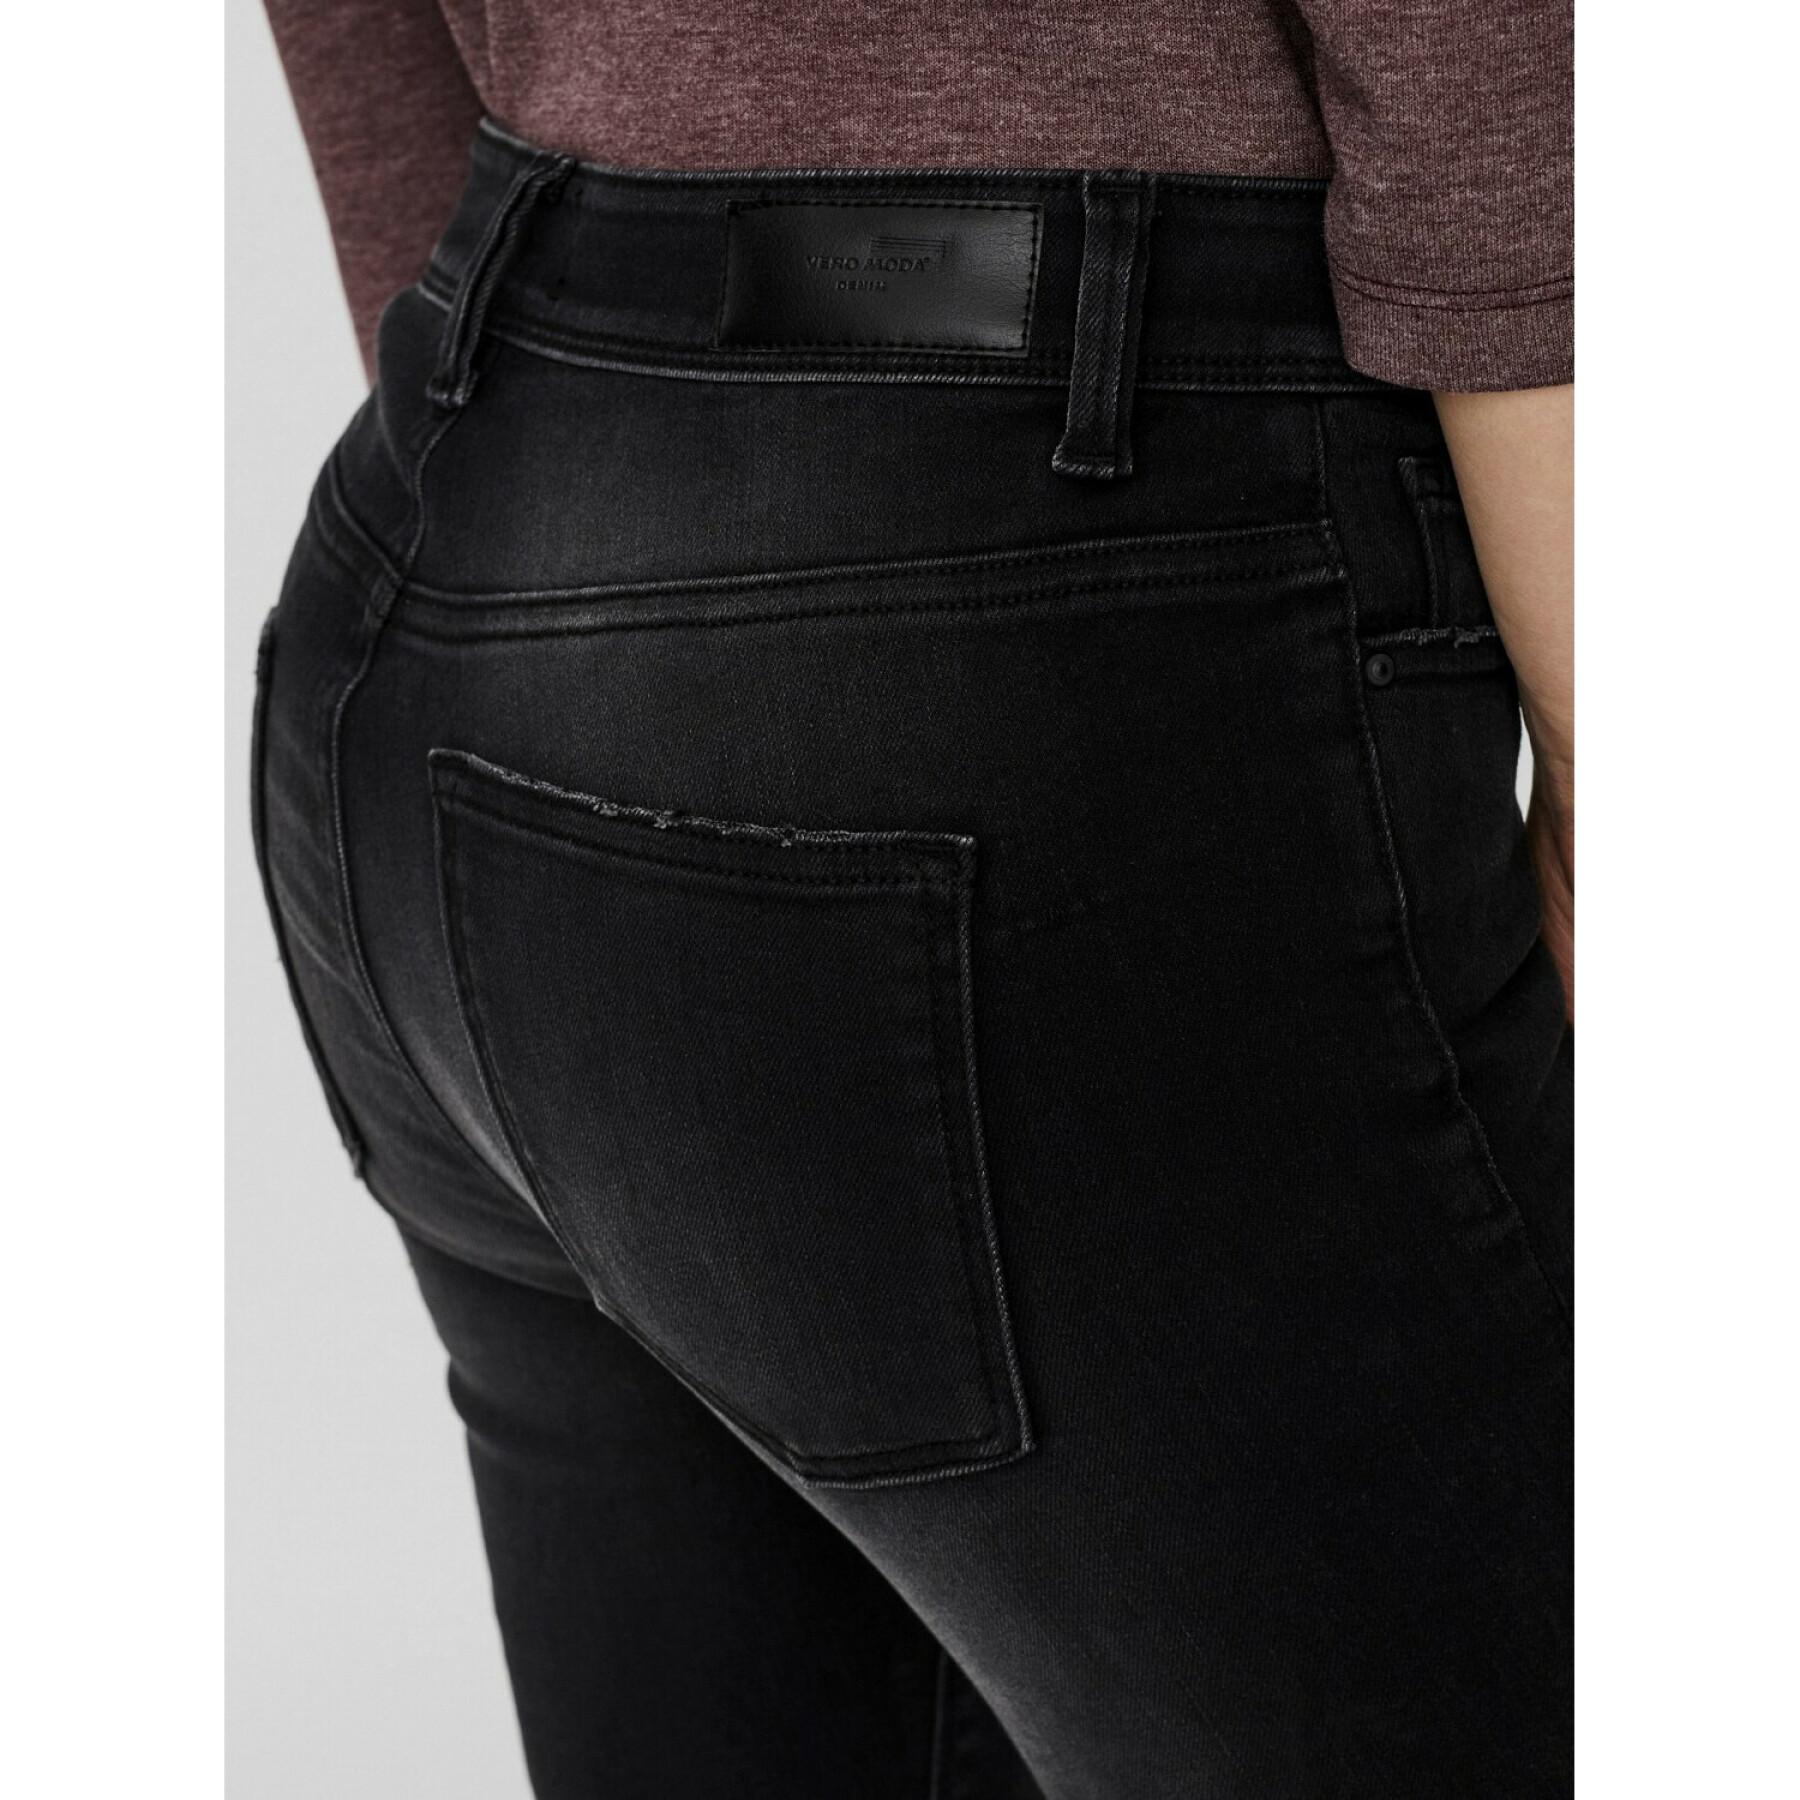 Women's skinny jeans Vero Moda vmpeach 1100